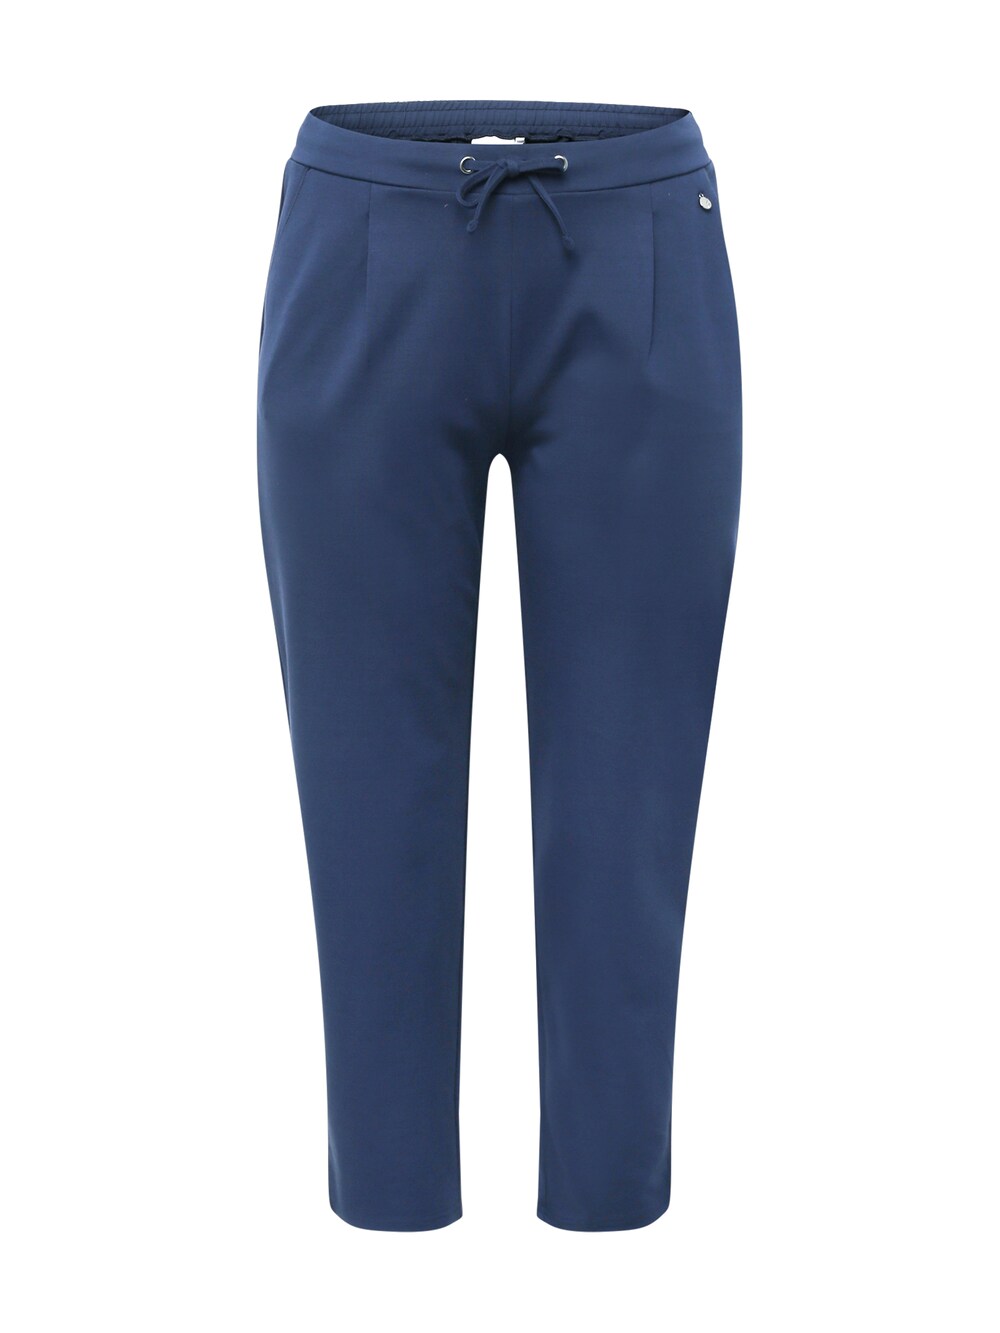 Узкие брюки со складками спереди Fransa Curve STRETCH, темно-синий платье fransa frfemelva синий